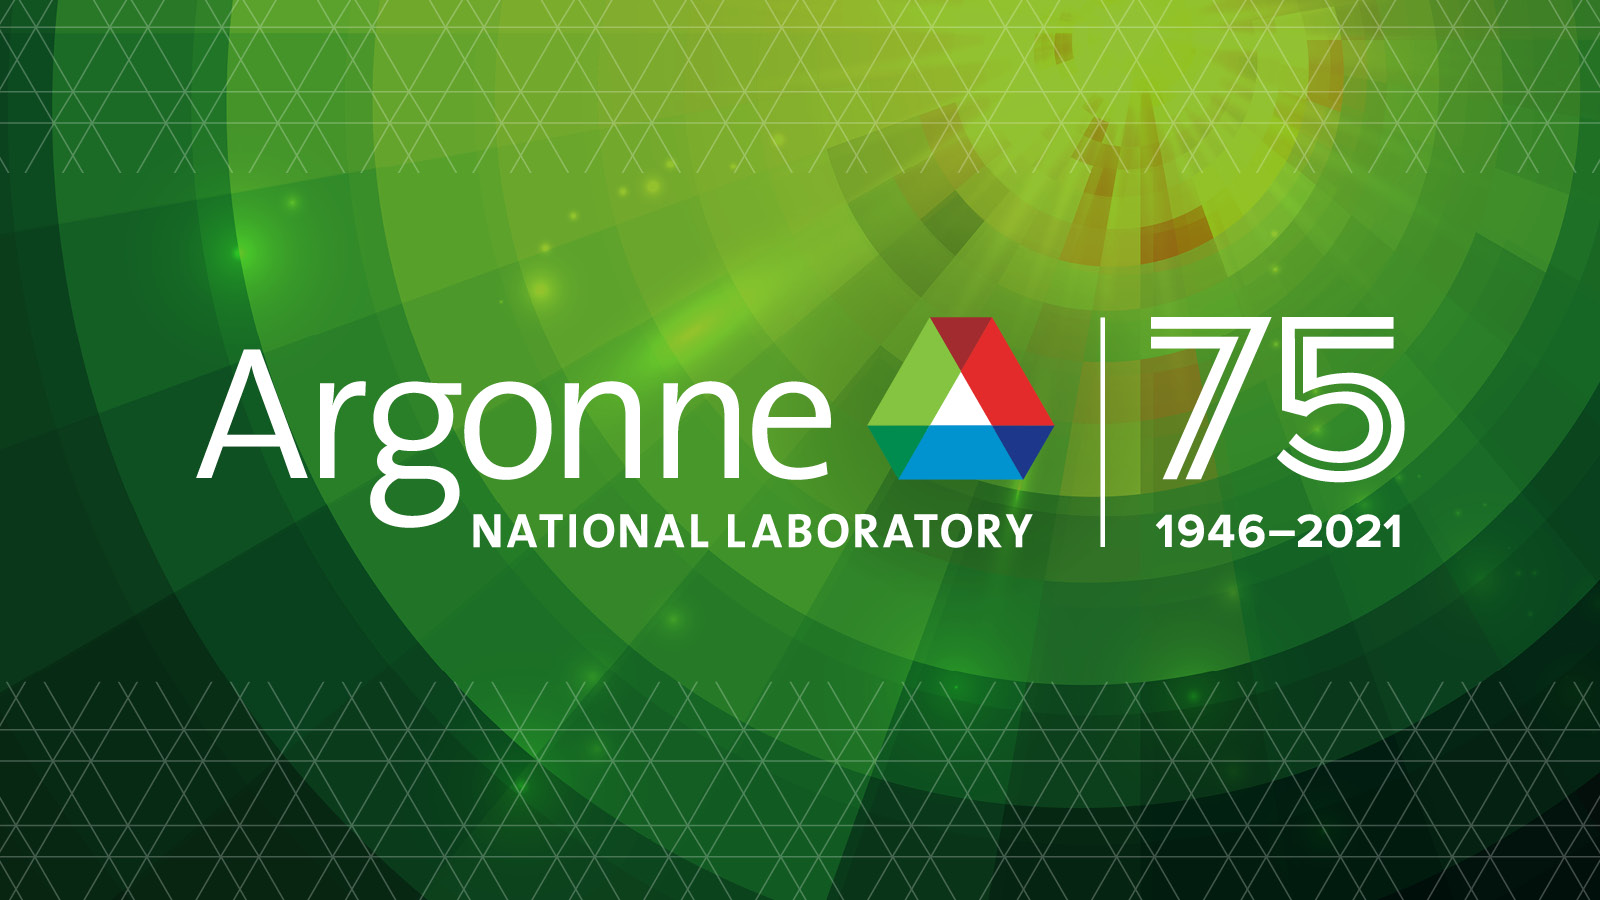 Green Argonne 75th Anniversary image